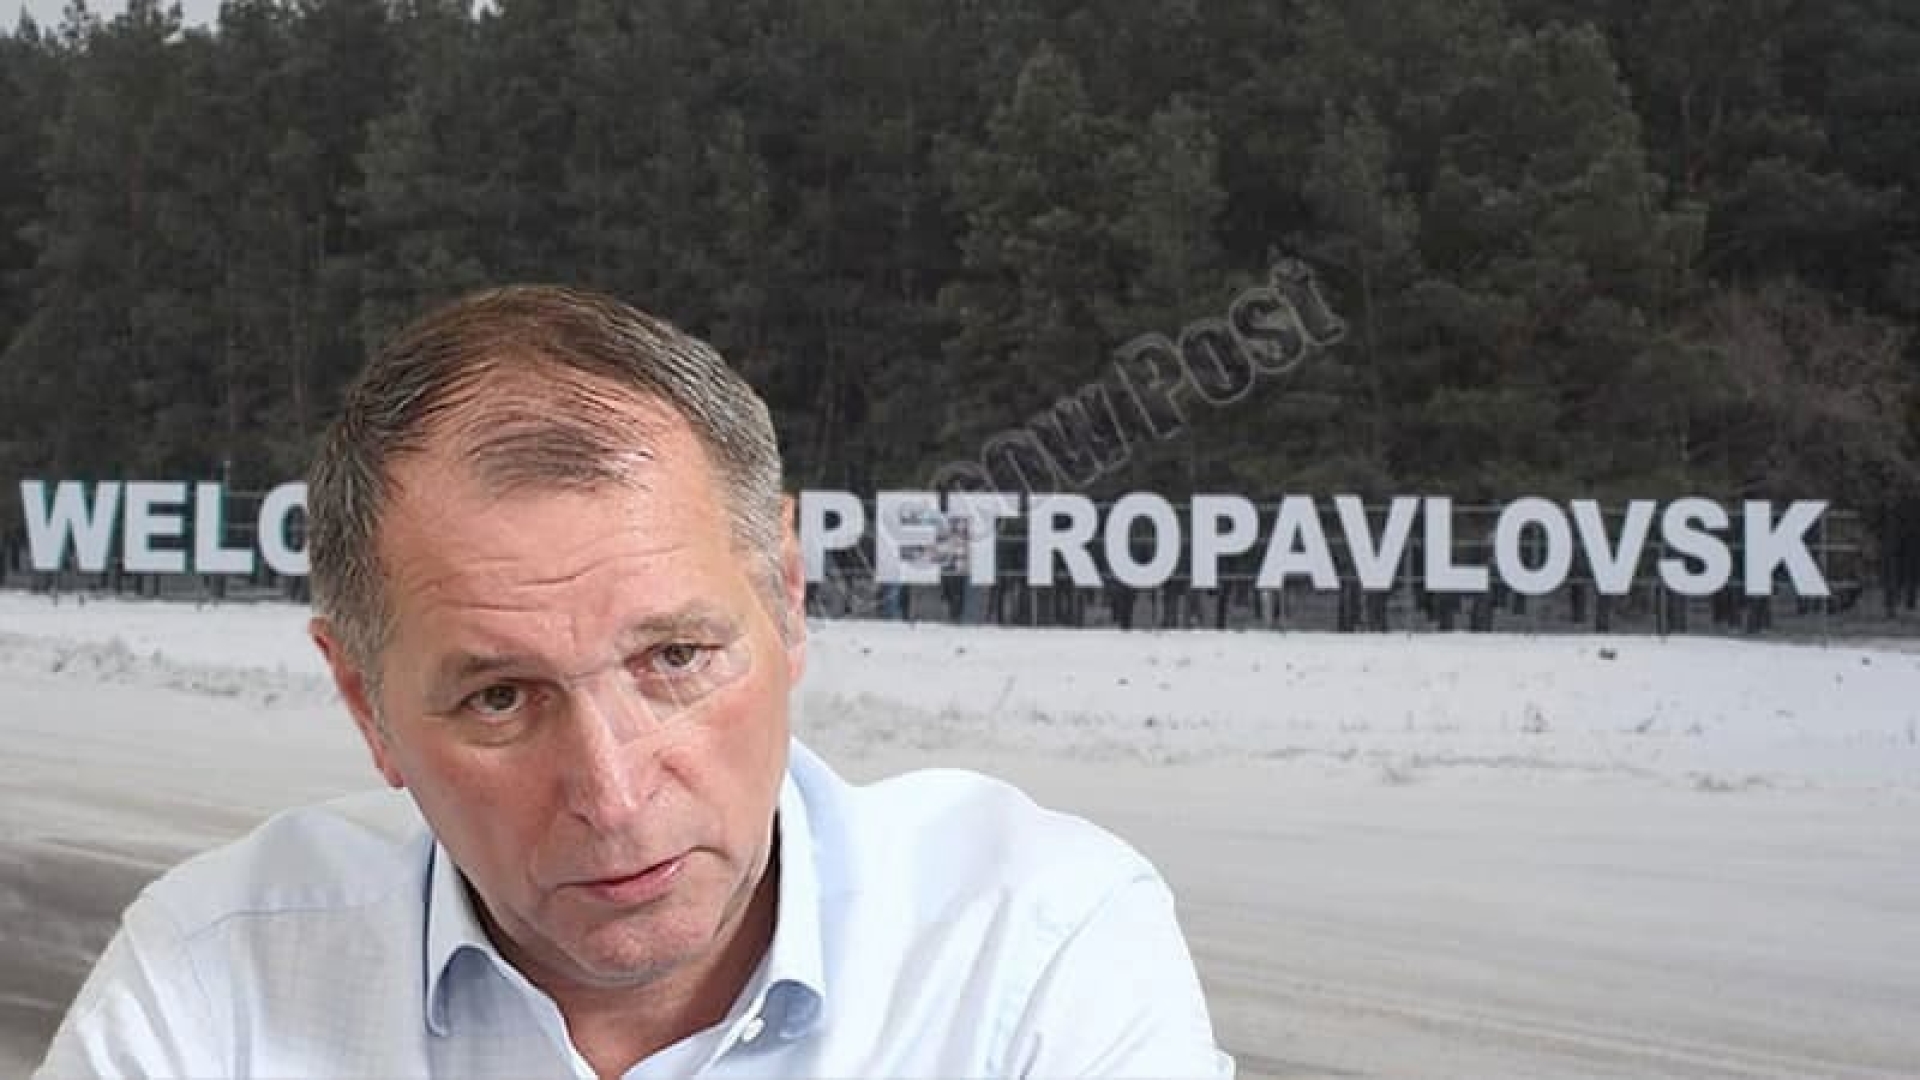 Strukov "fading away" over Petropavlovsk